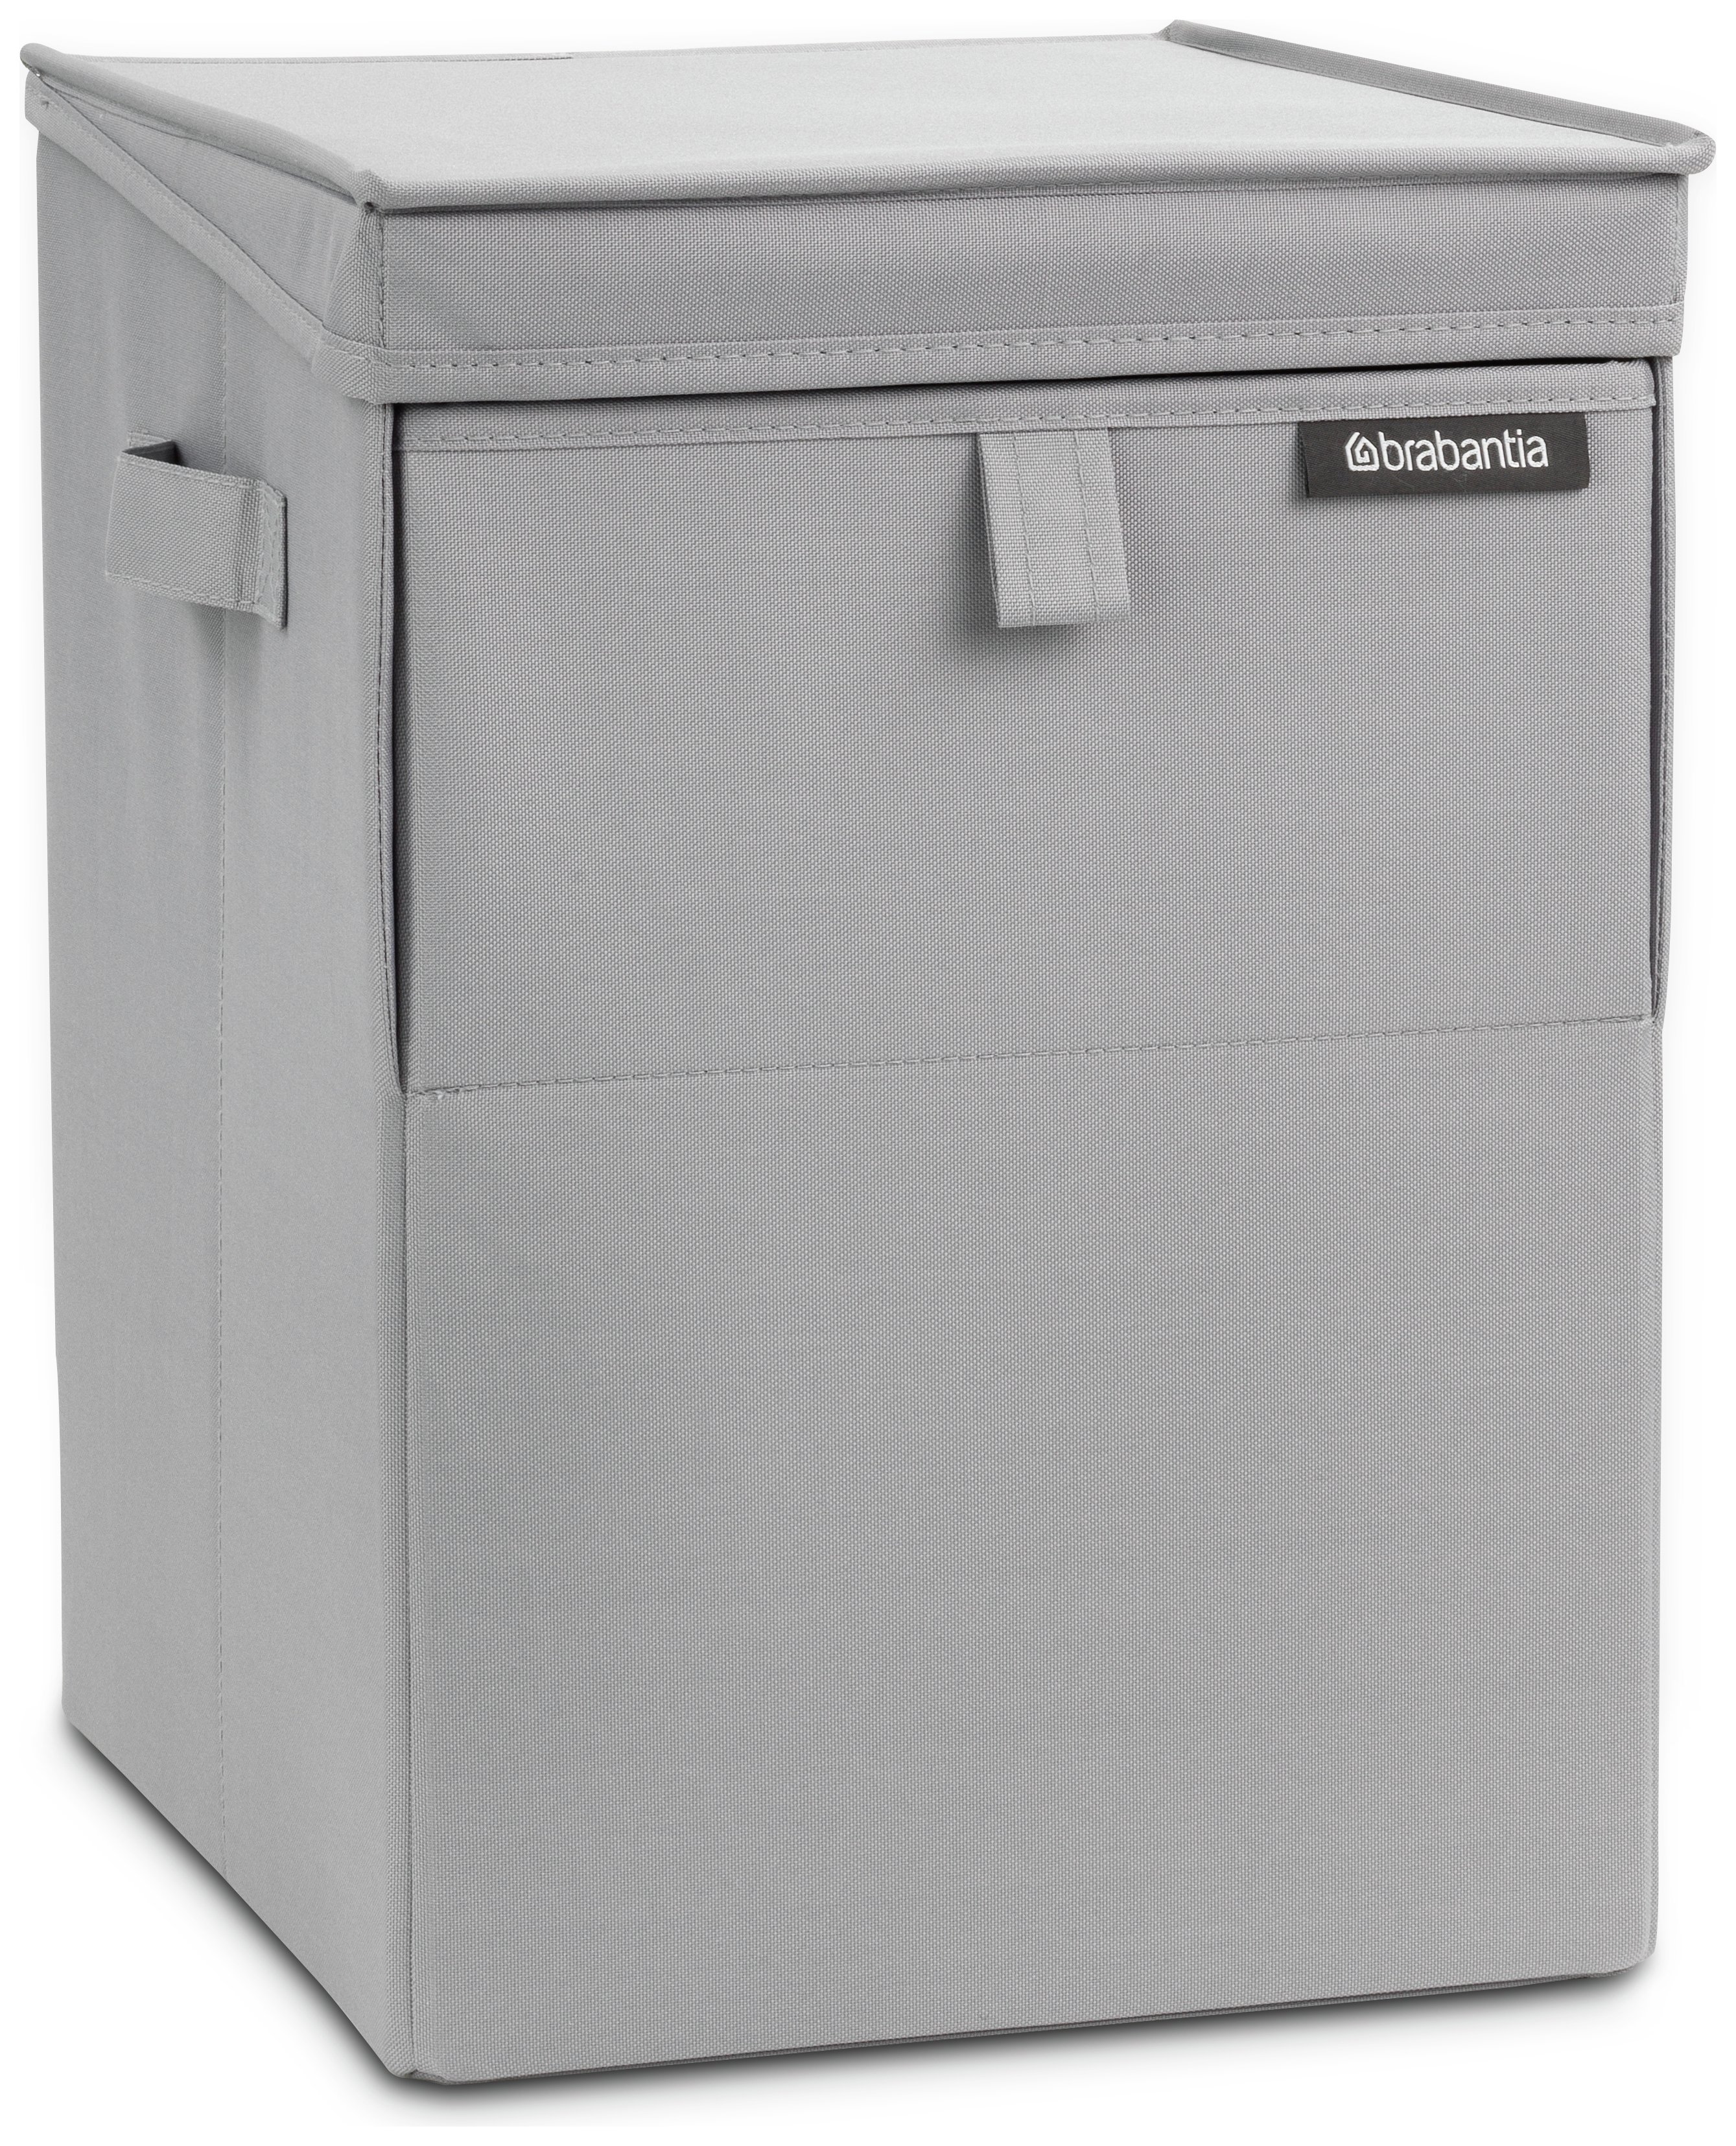 Brabantia 35 Litre Stackable Laundry Box - Grey